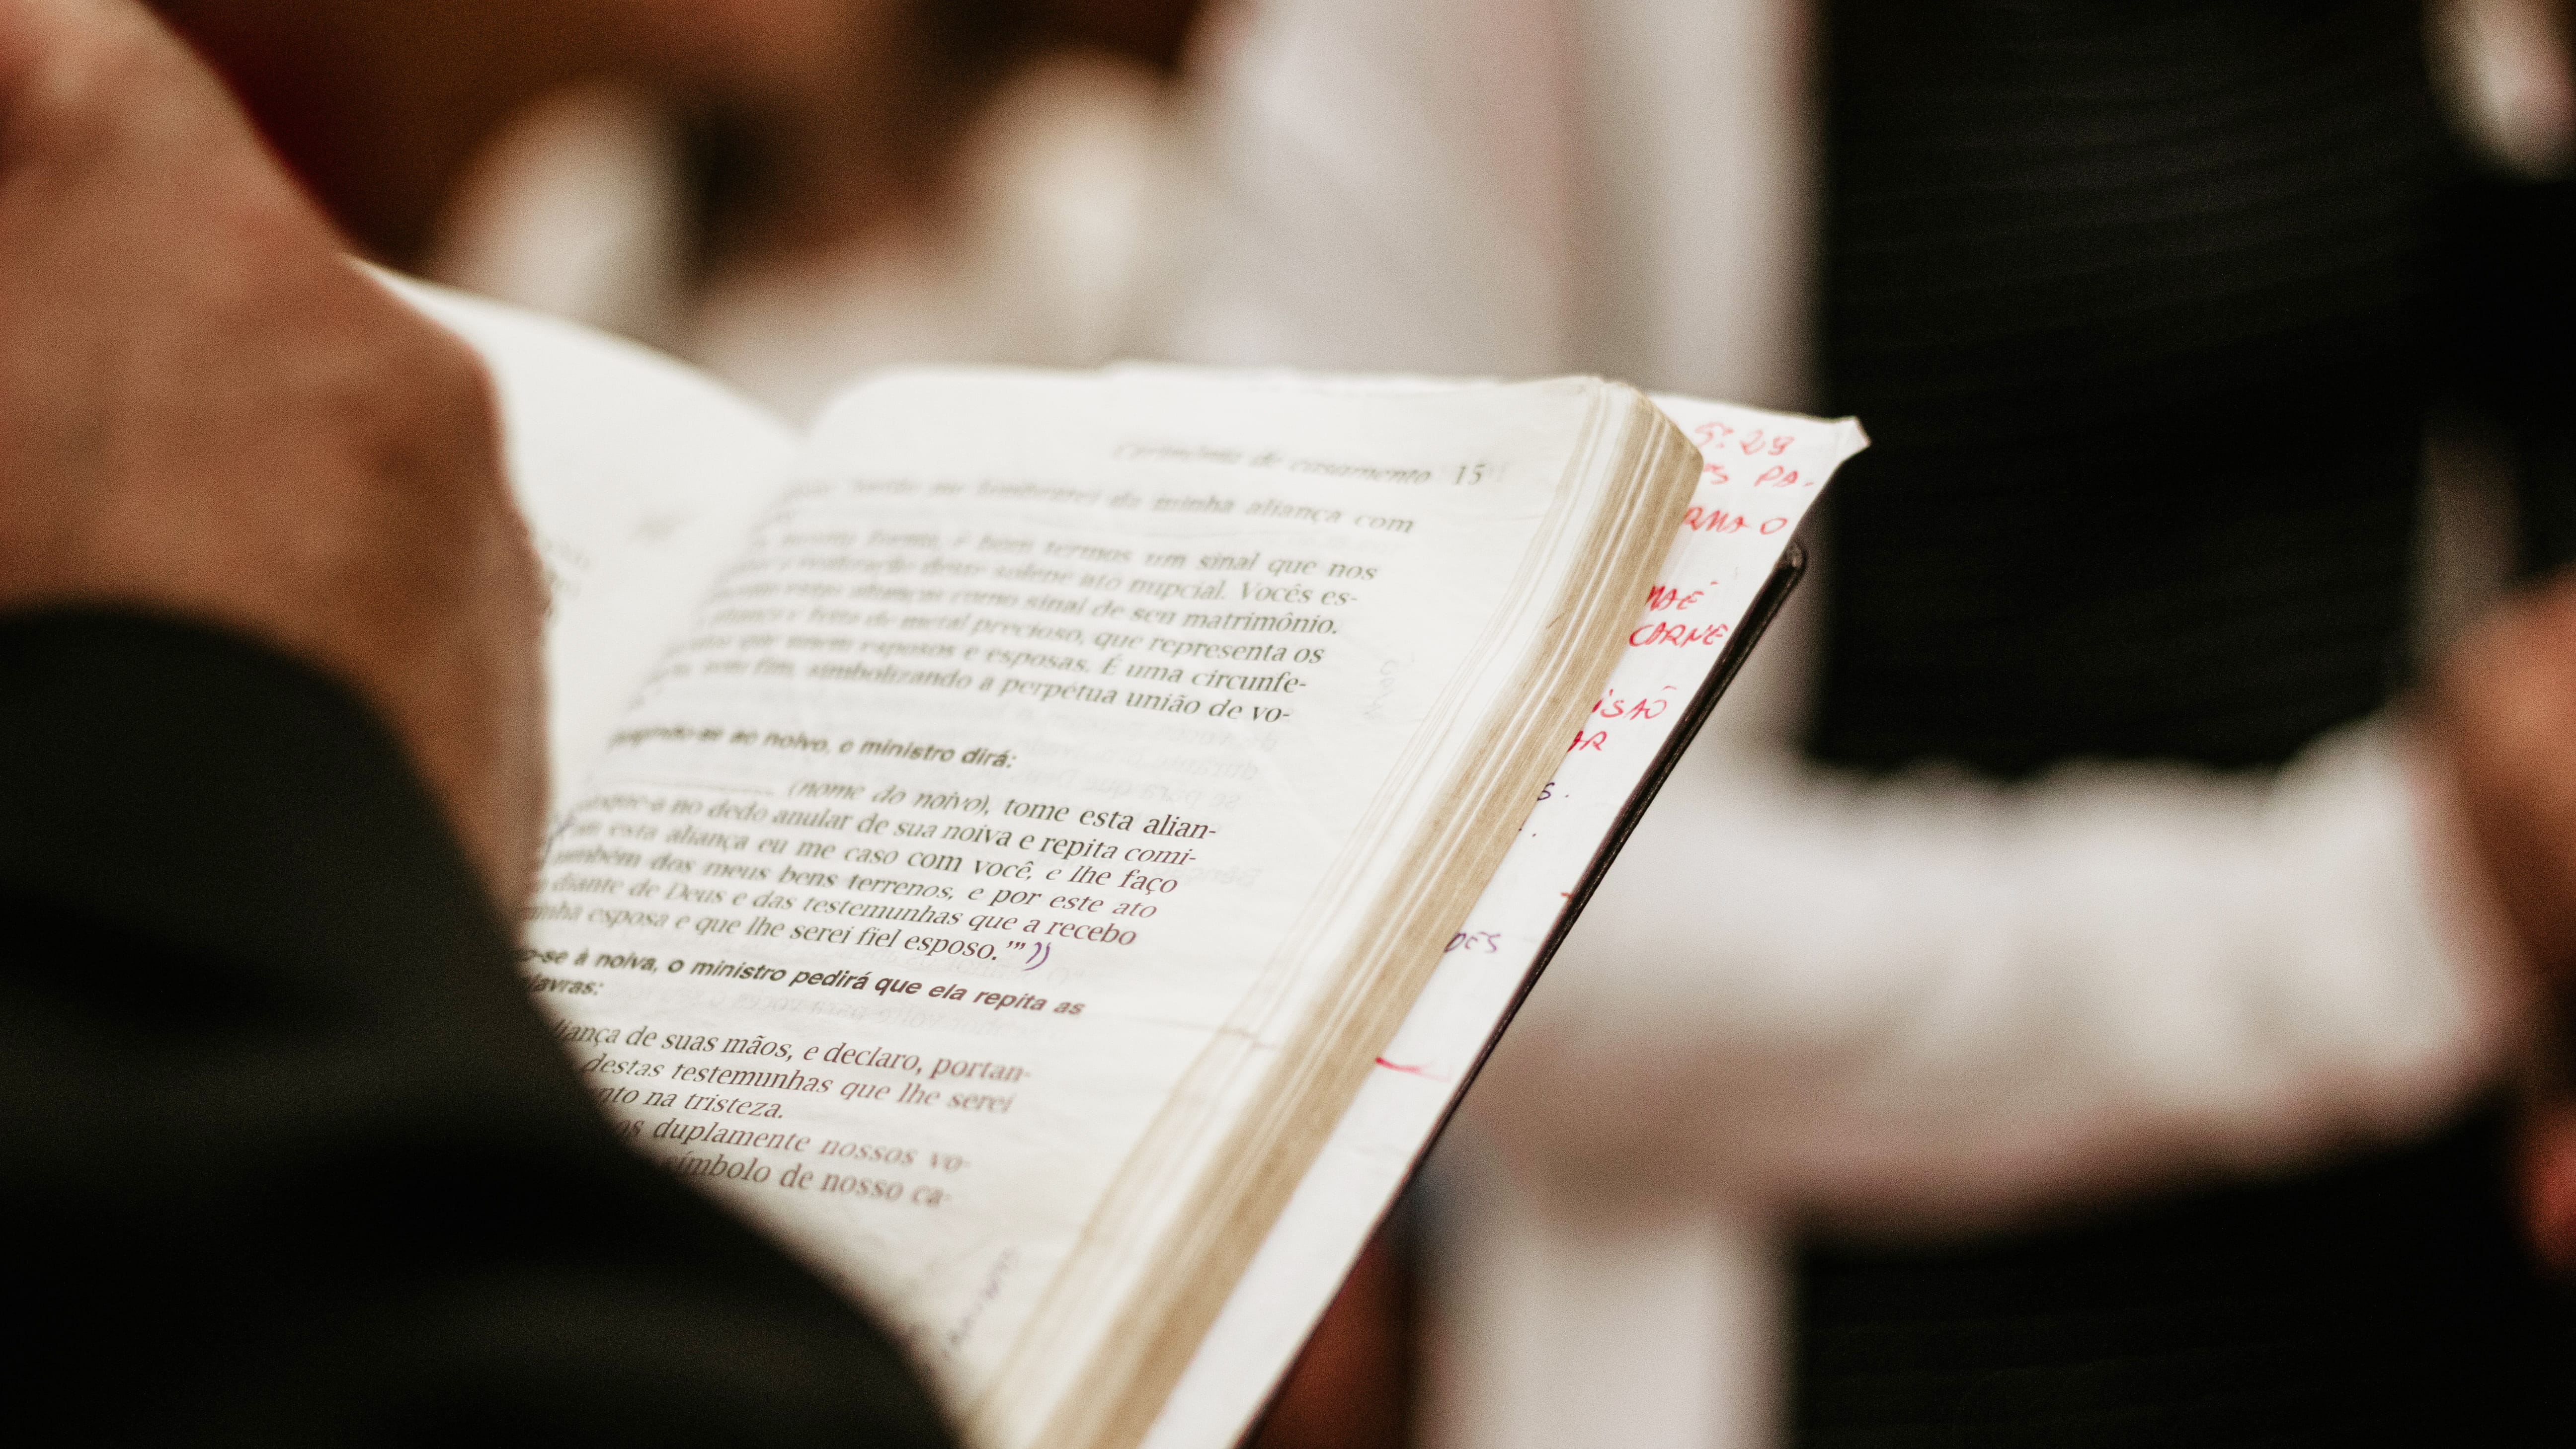 Closeup of pastor using a Spanish-language Bible during worship. Photo by Nicolas Rizzon on Unsplash.